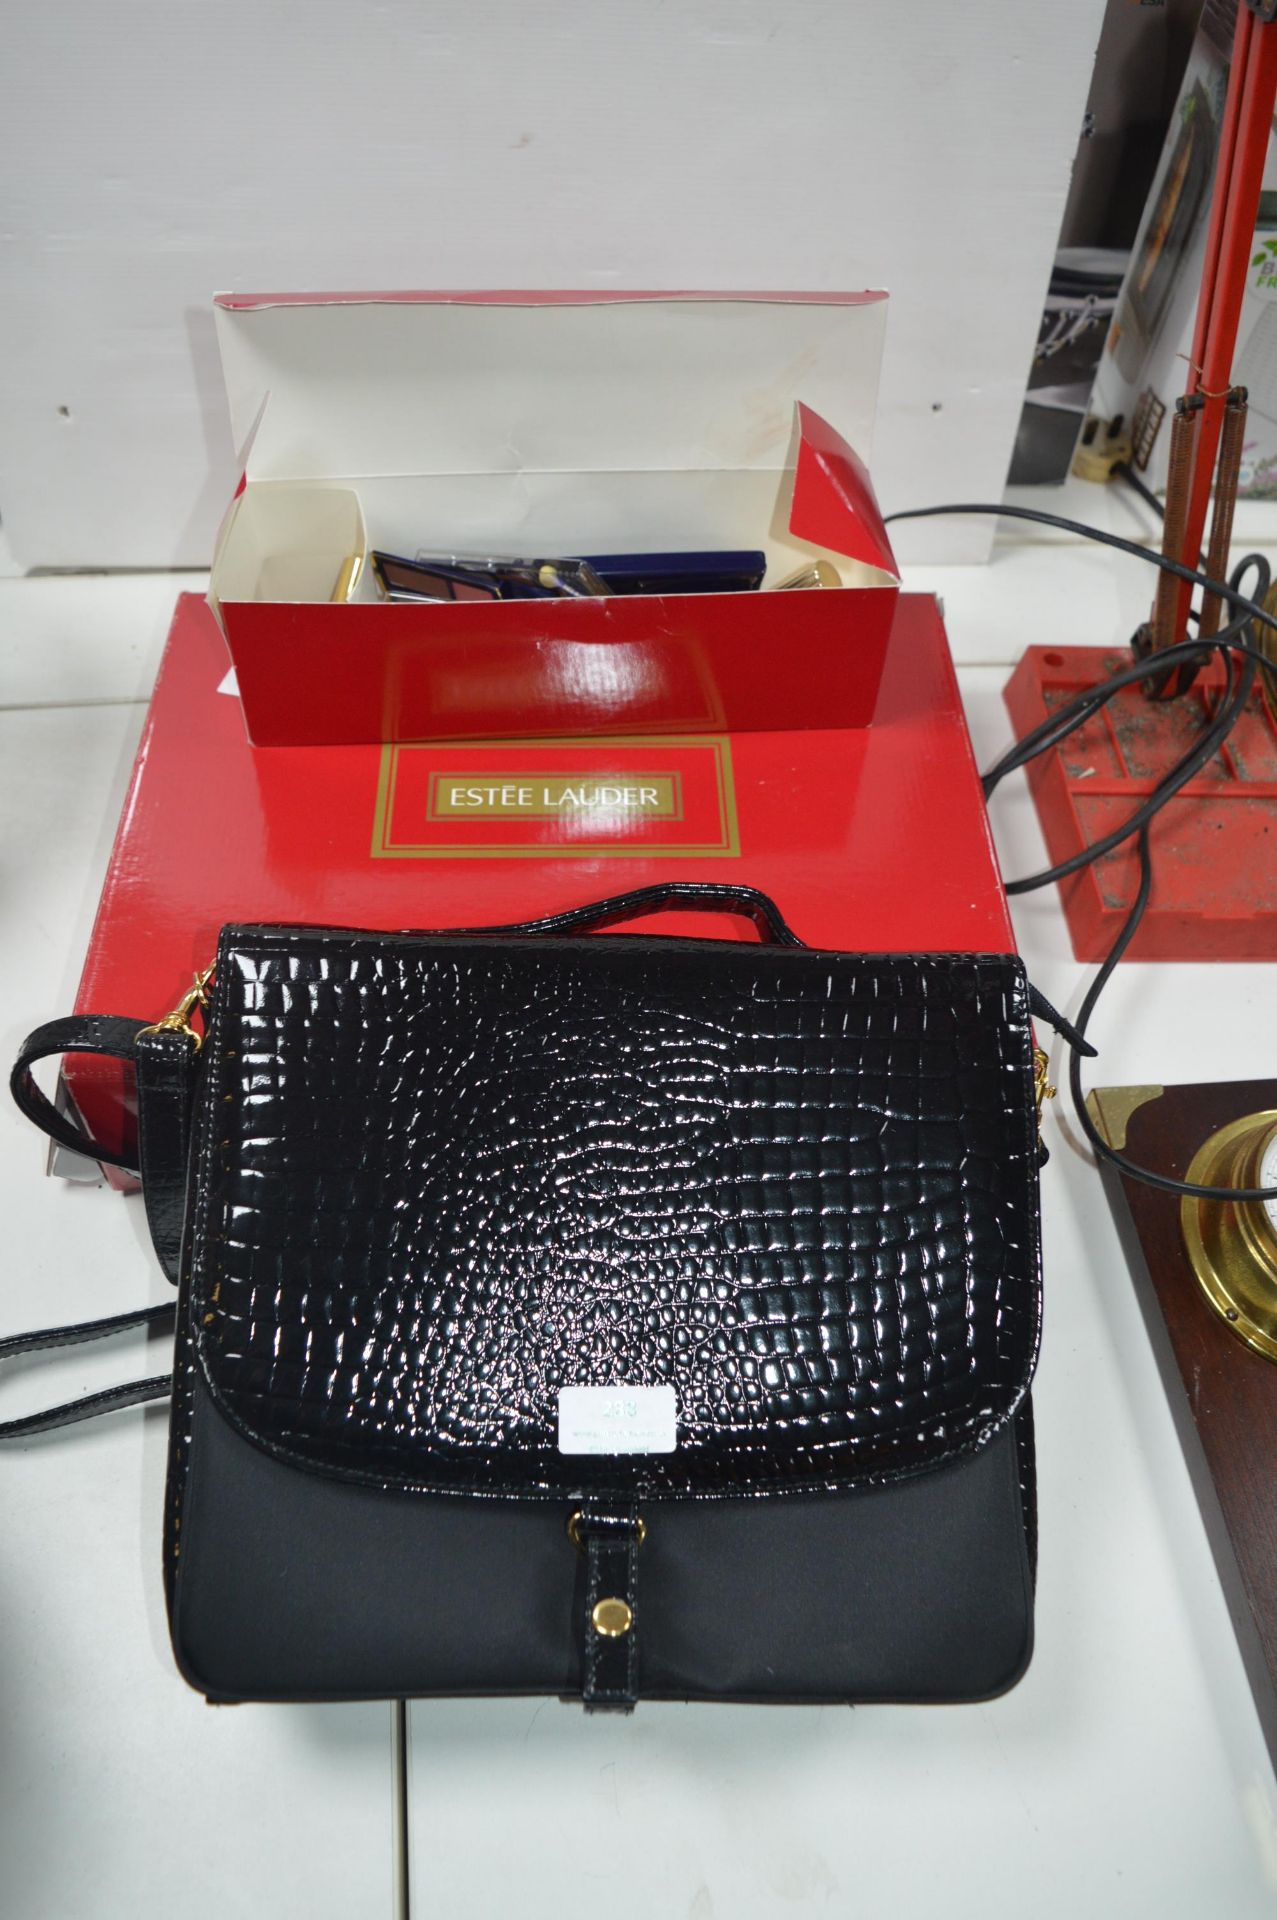 Estee Lauder Gift Set; Handbag and Cosmetics